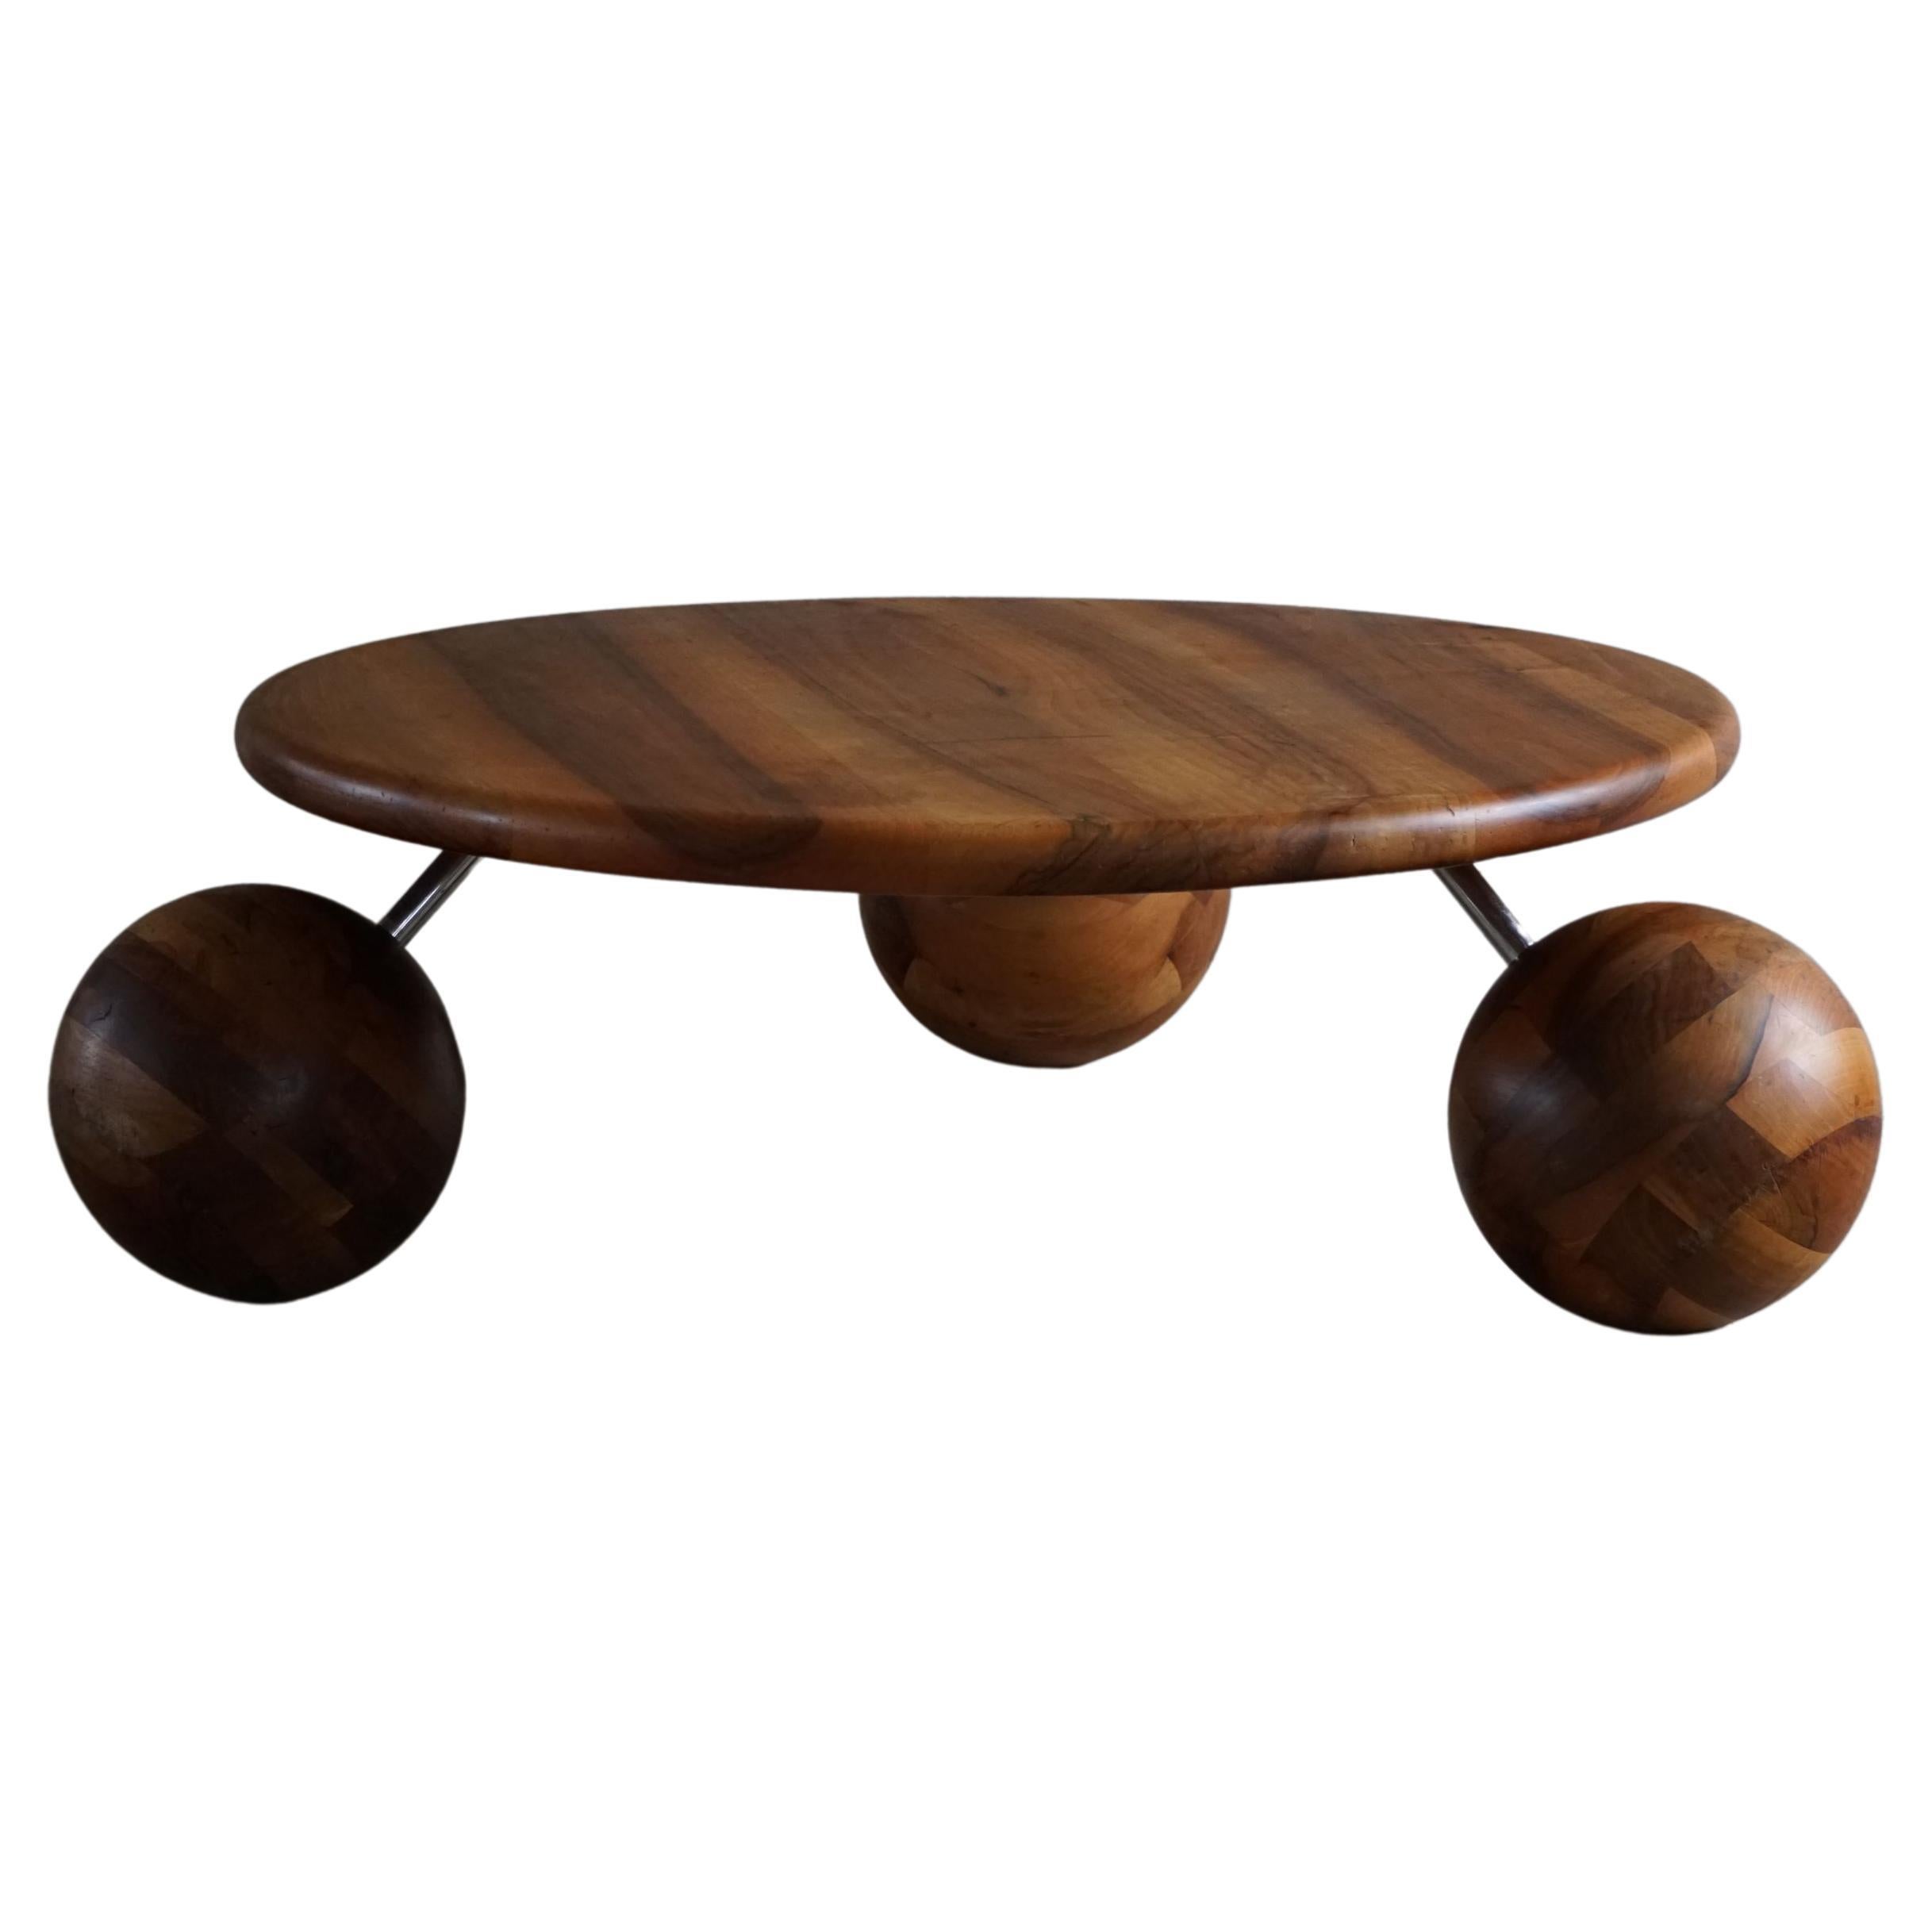 Midcentury, Sculptural Round Sofa/Coffee Table in Wood & Steel, 1970s